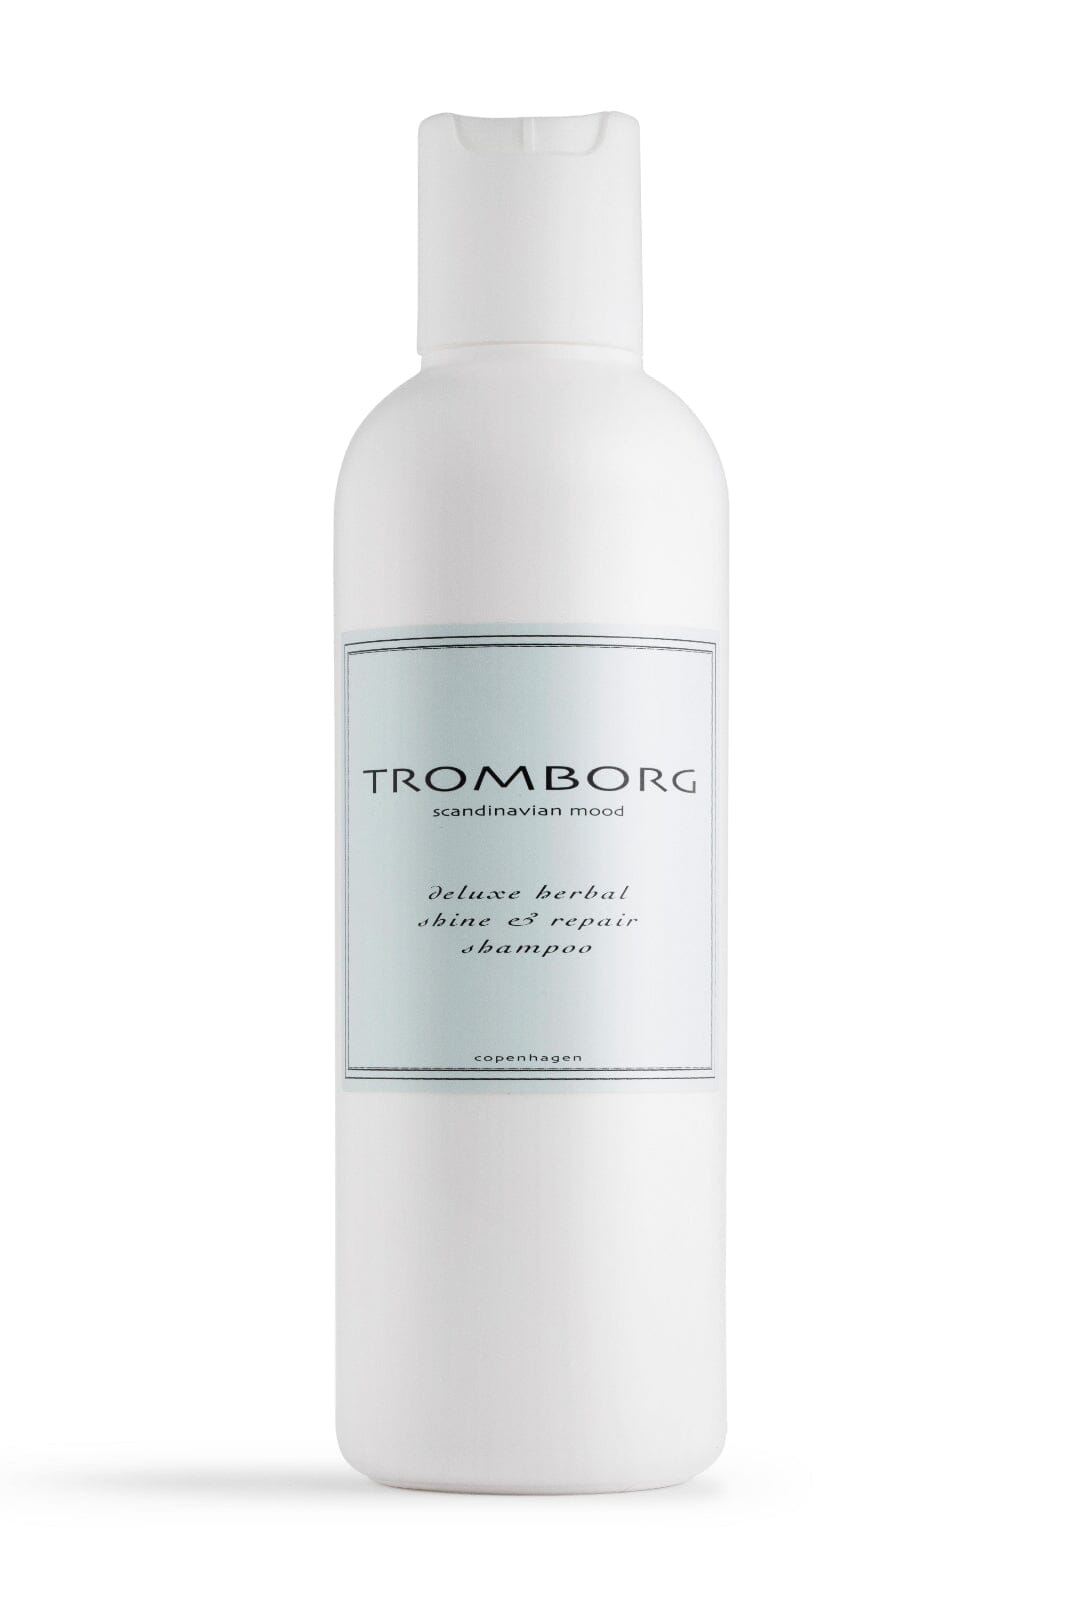 Tromborg - Deluxe Herbal Shine & Repair Shampoo Shampoo 